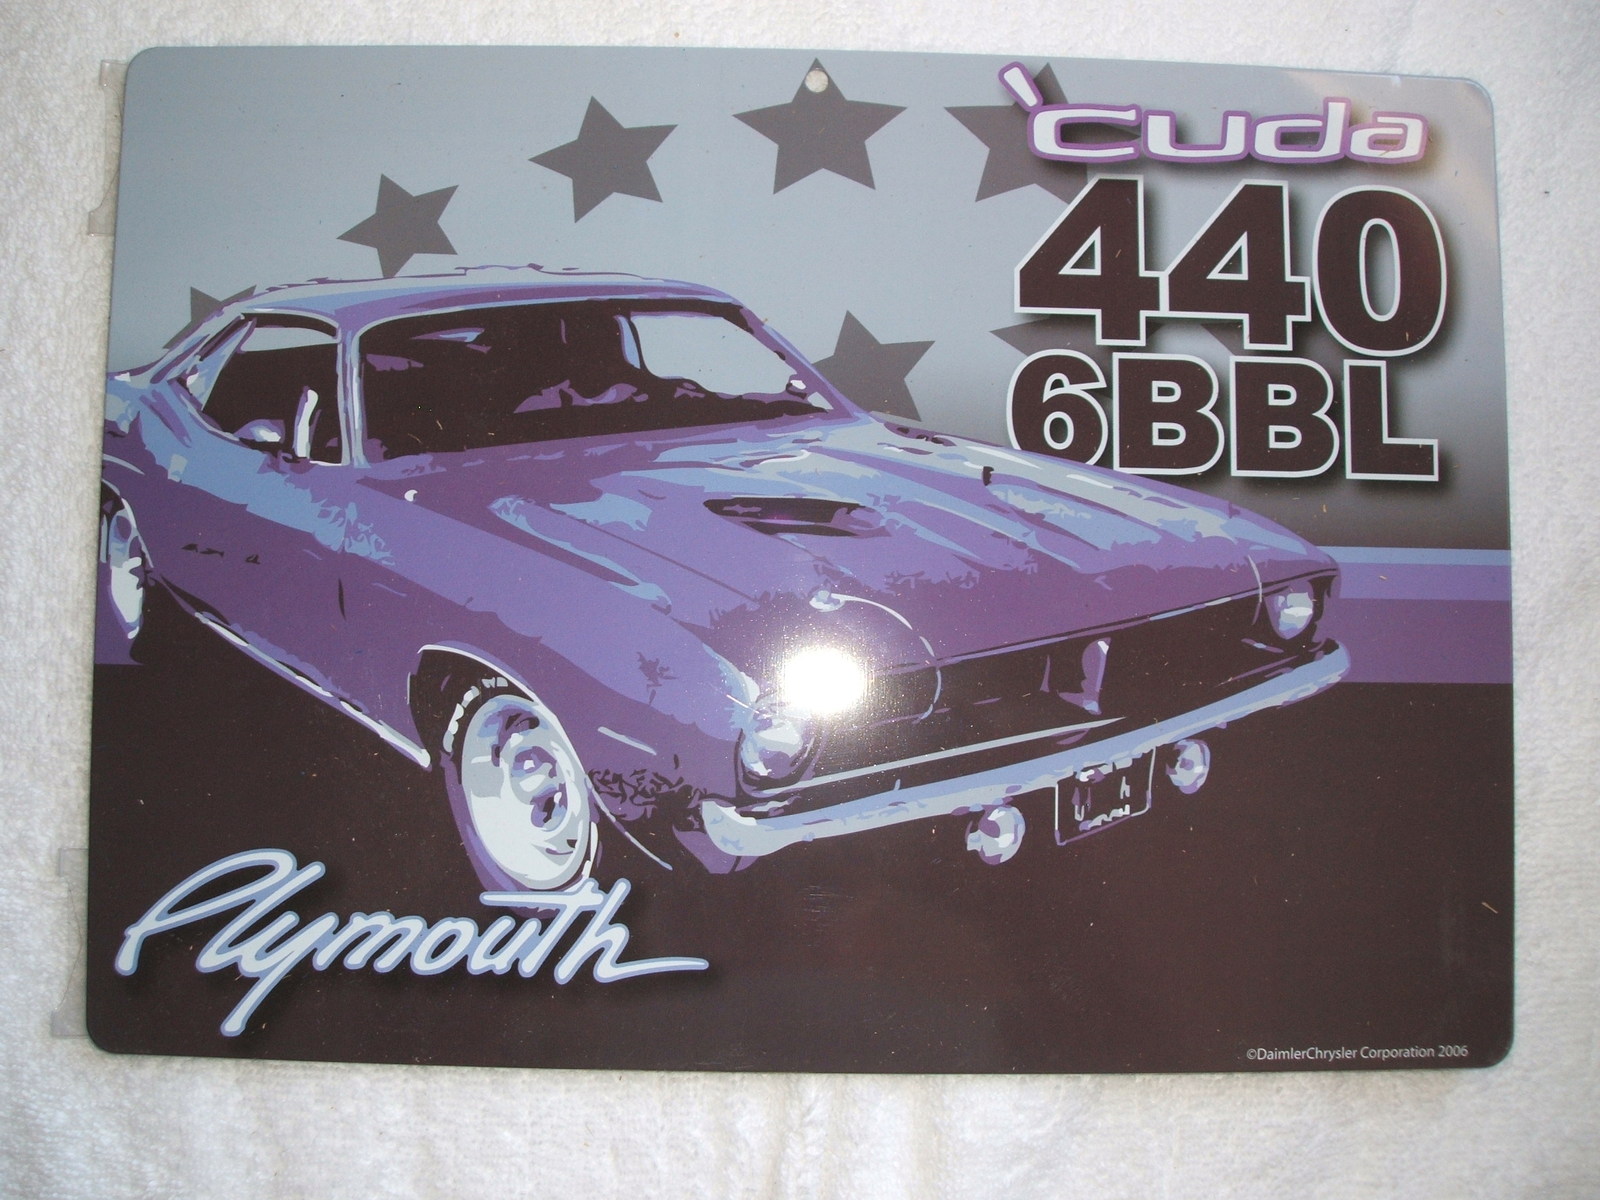 OLD VTG Plymouth - 'Cuda 440 6BBL' Tin Metal Sign - $20.00